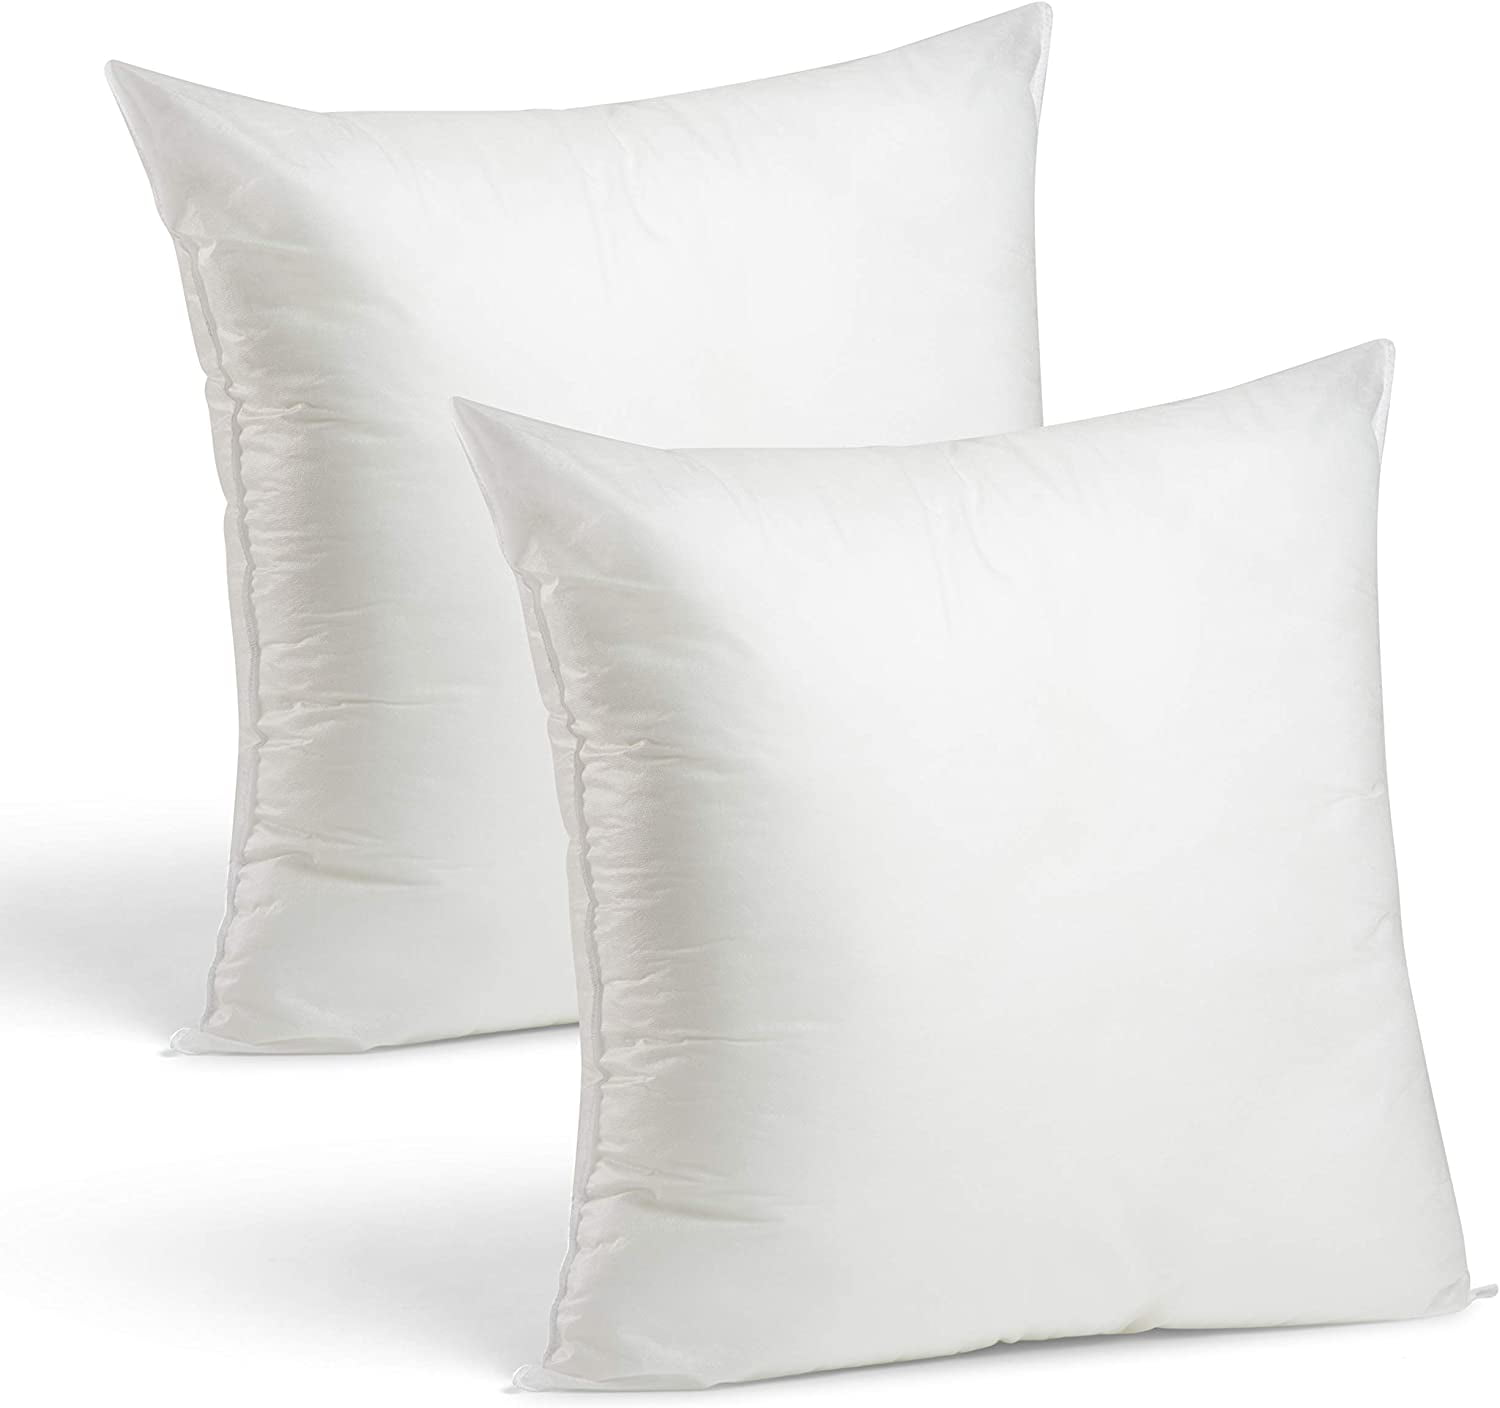 Set Of 2-24 X 24 Premium Hypoallergenic Stuffer Pillow Inserts Euro Sham Square 